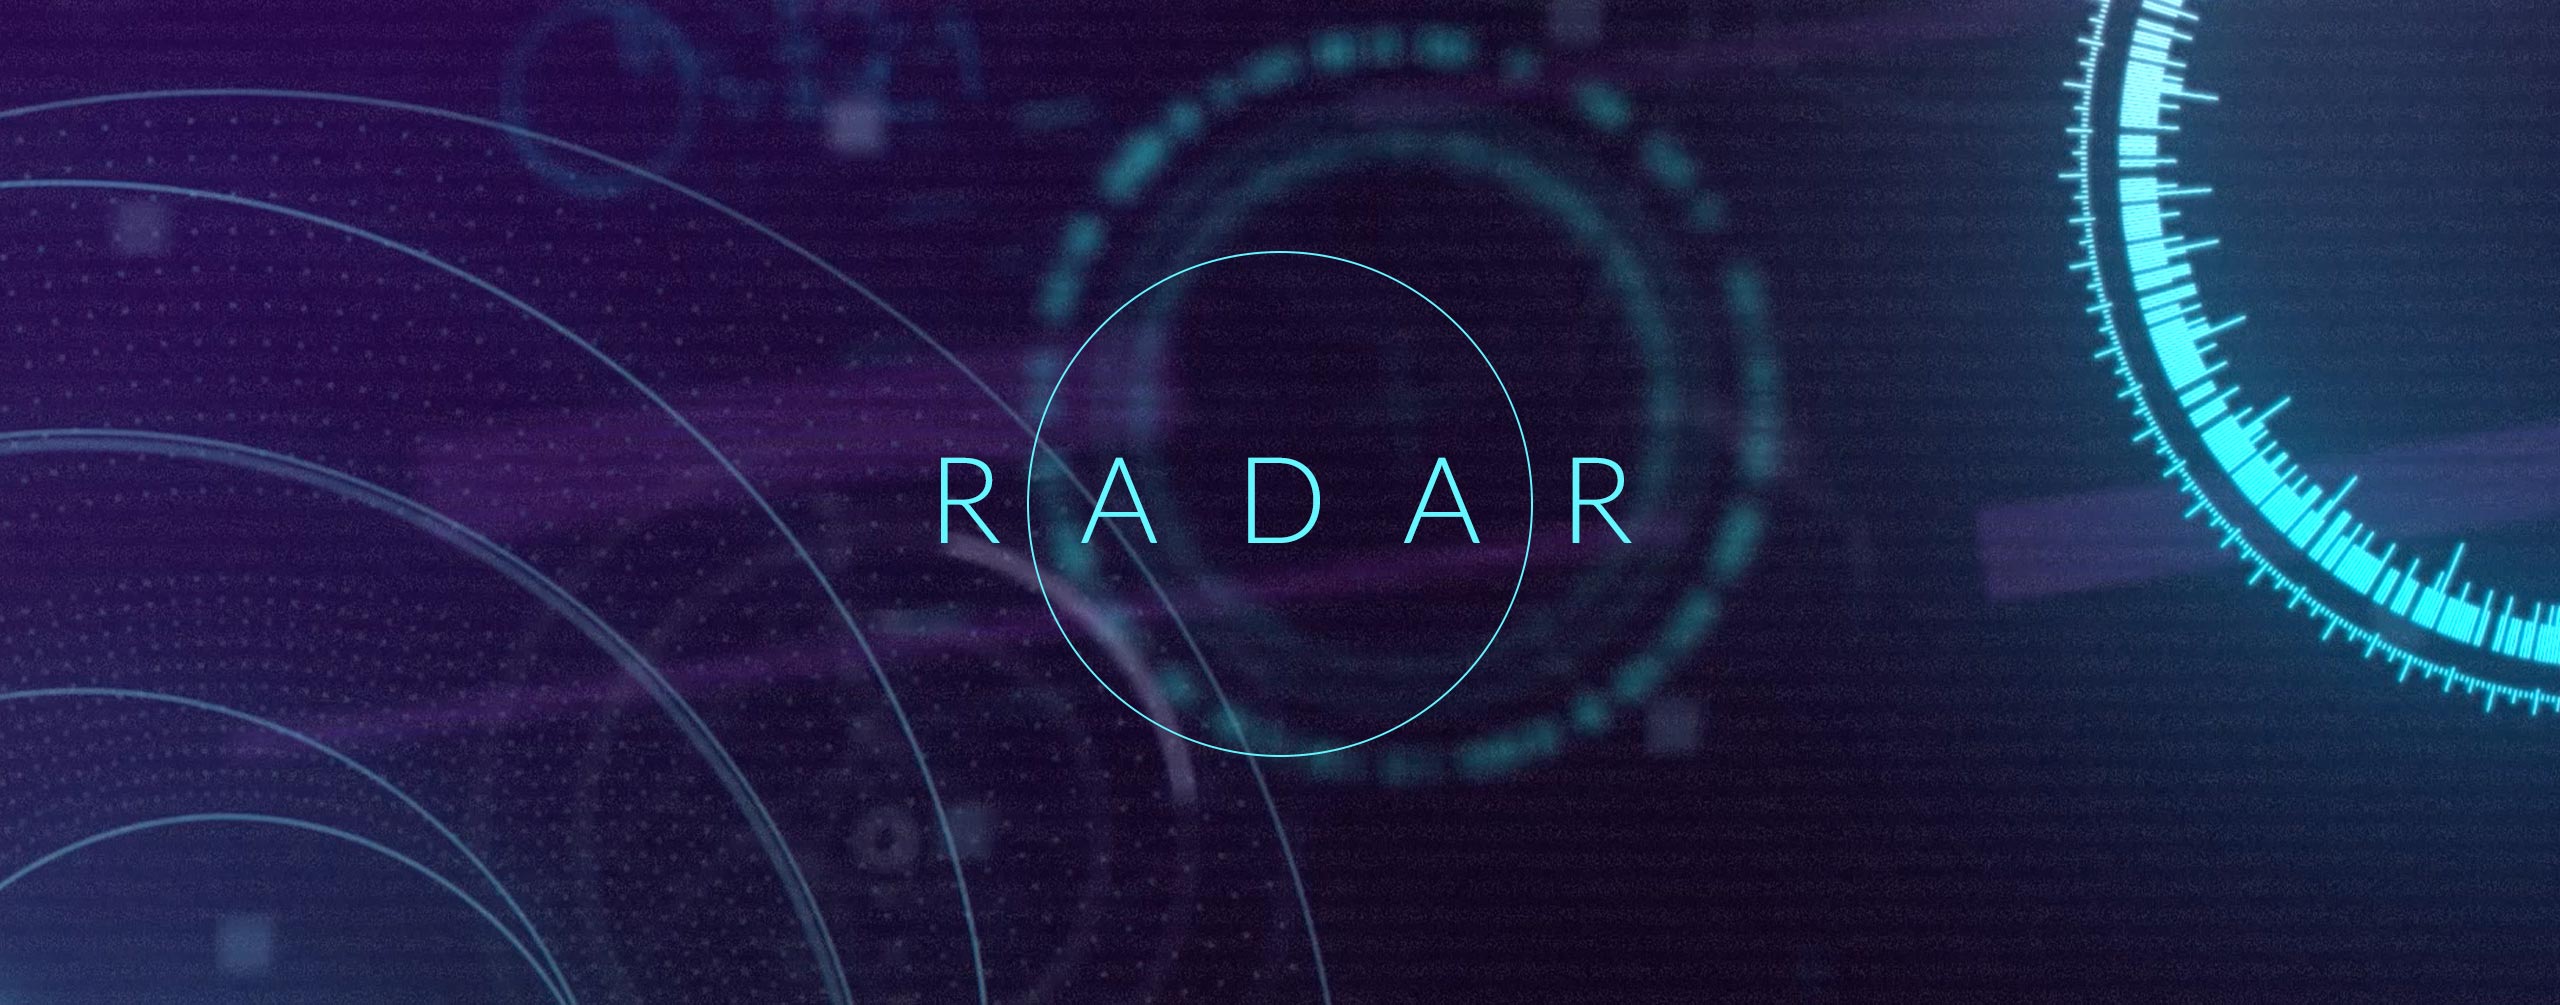 Radar - Maps, Grids, HUDs Effects